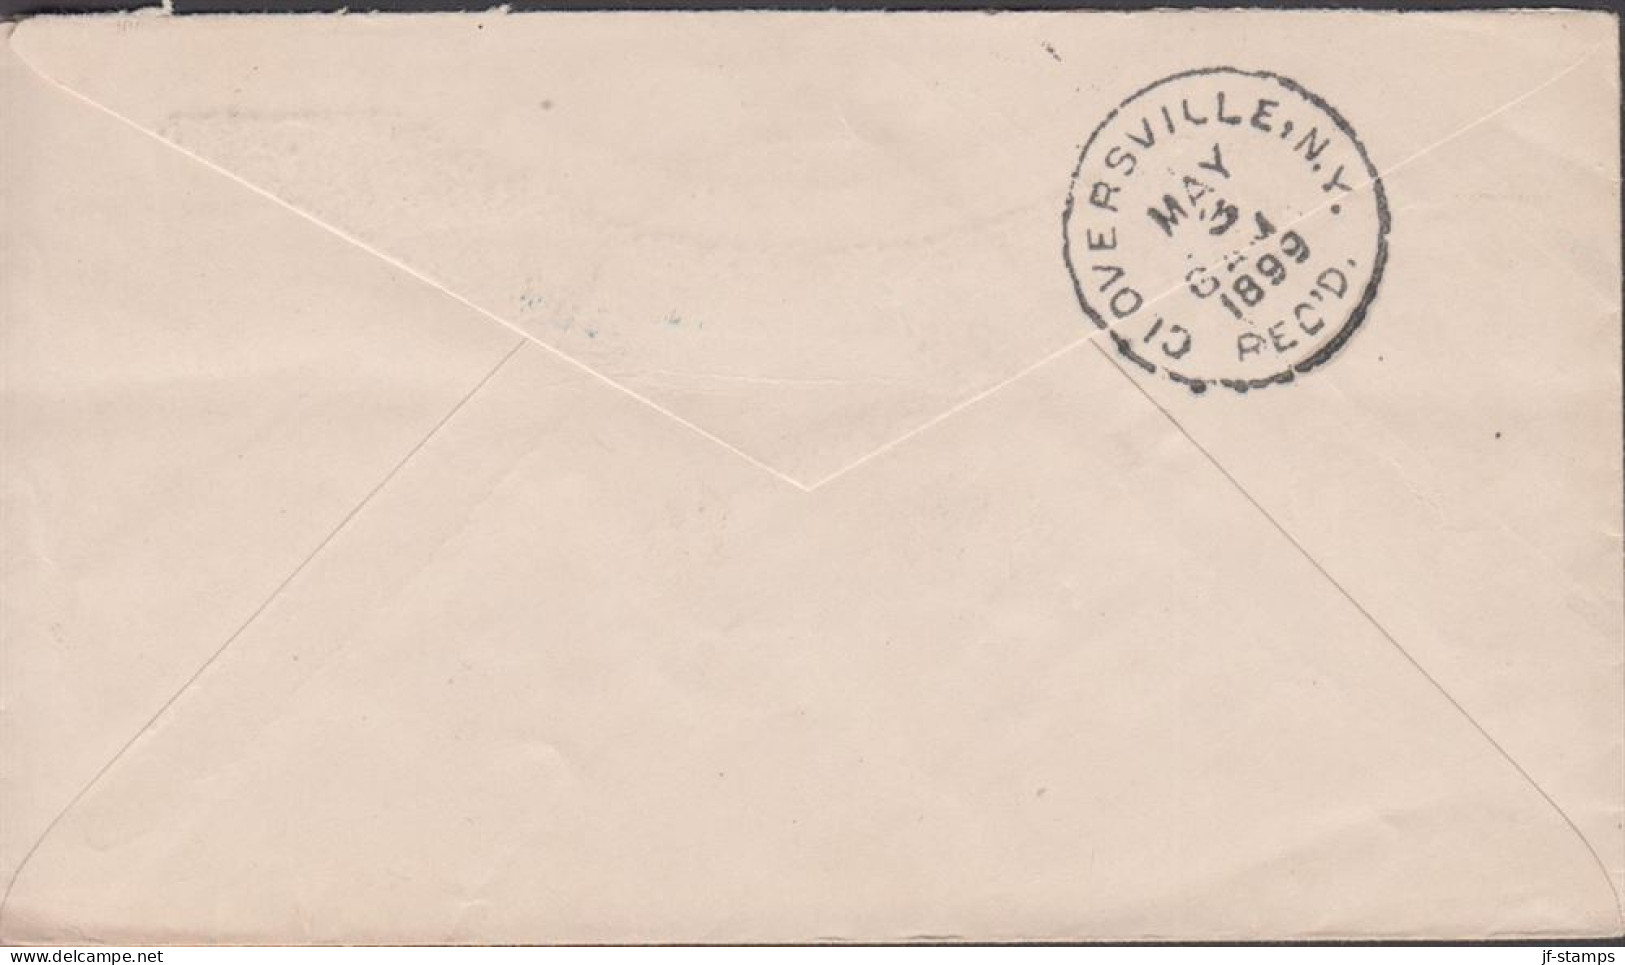 1899. CANADA, Victoria. 2 CENTS On Cover To Cloversville, USA Cancelled WINNIPIG 7 AP 29 99 CA... (Michel 64) - JF439376 - Briefe U. Dokumente